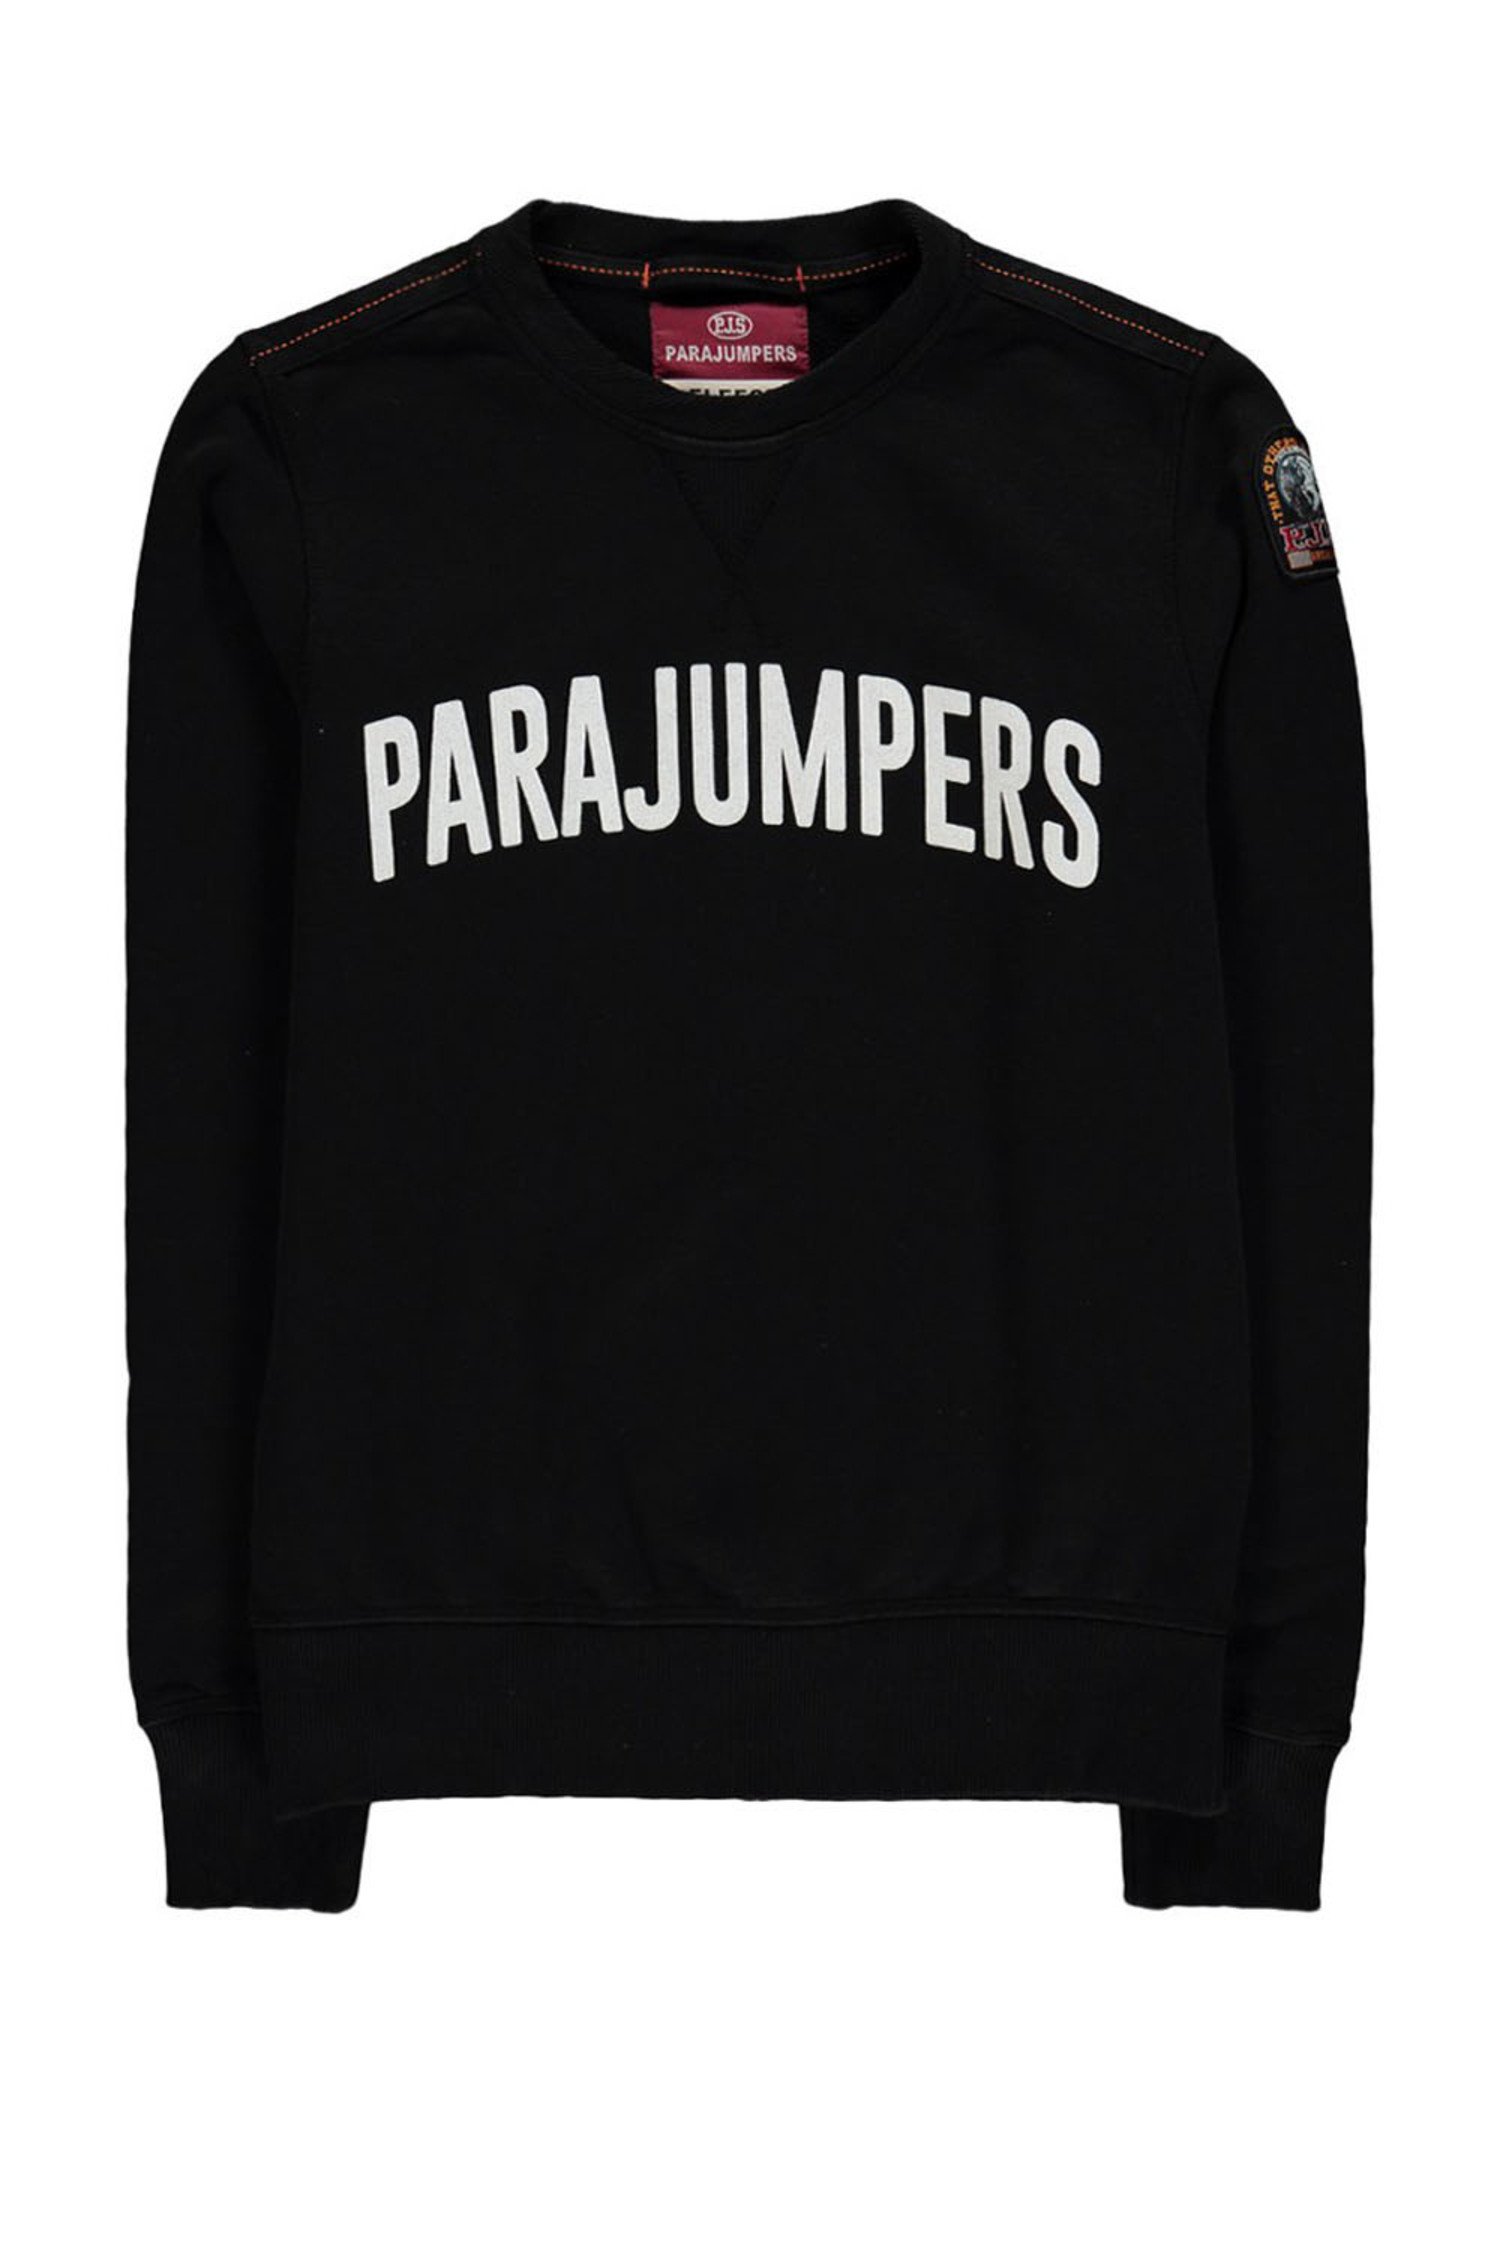 Parajumper sweater Bianca - Dresscode